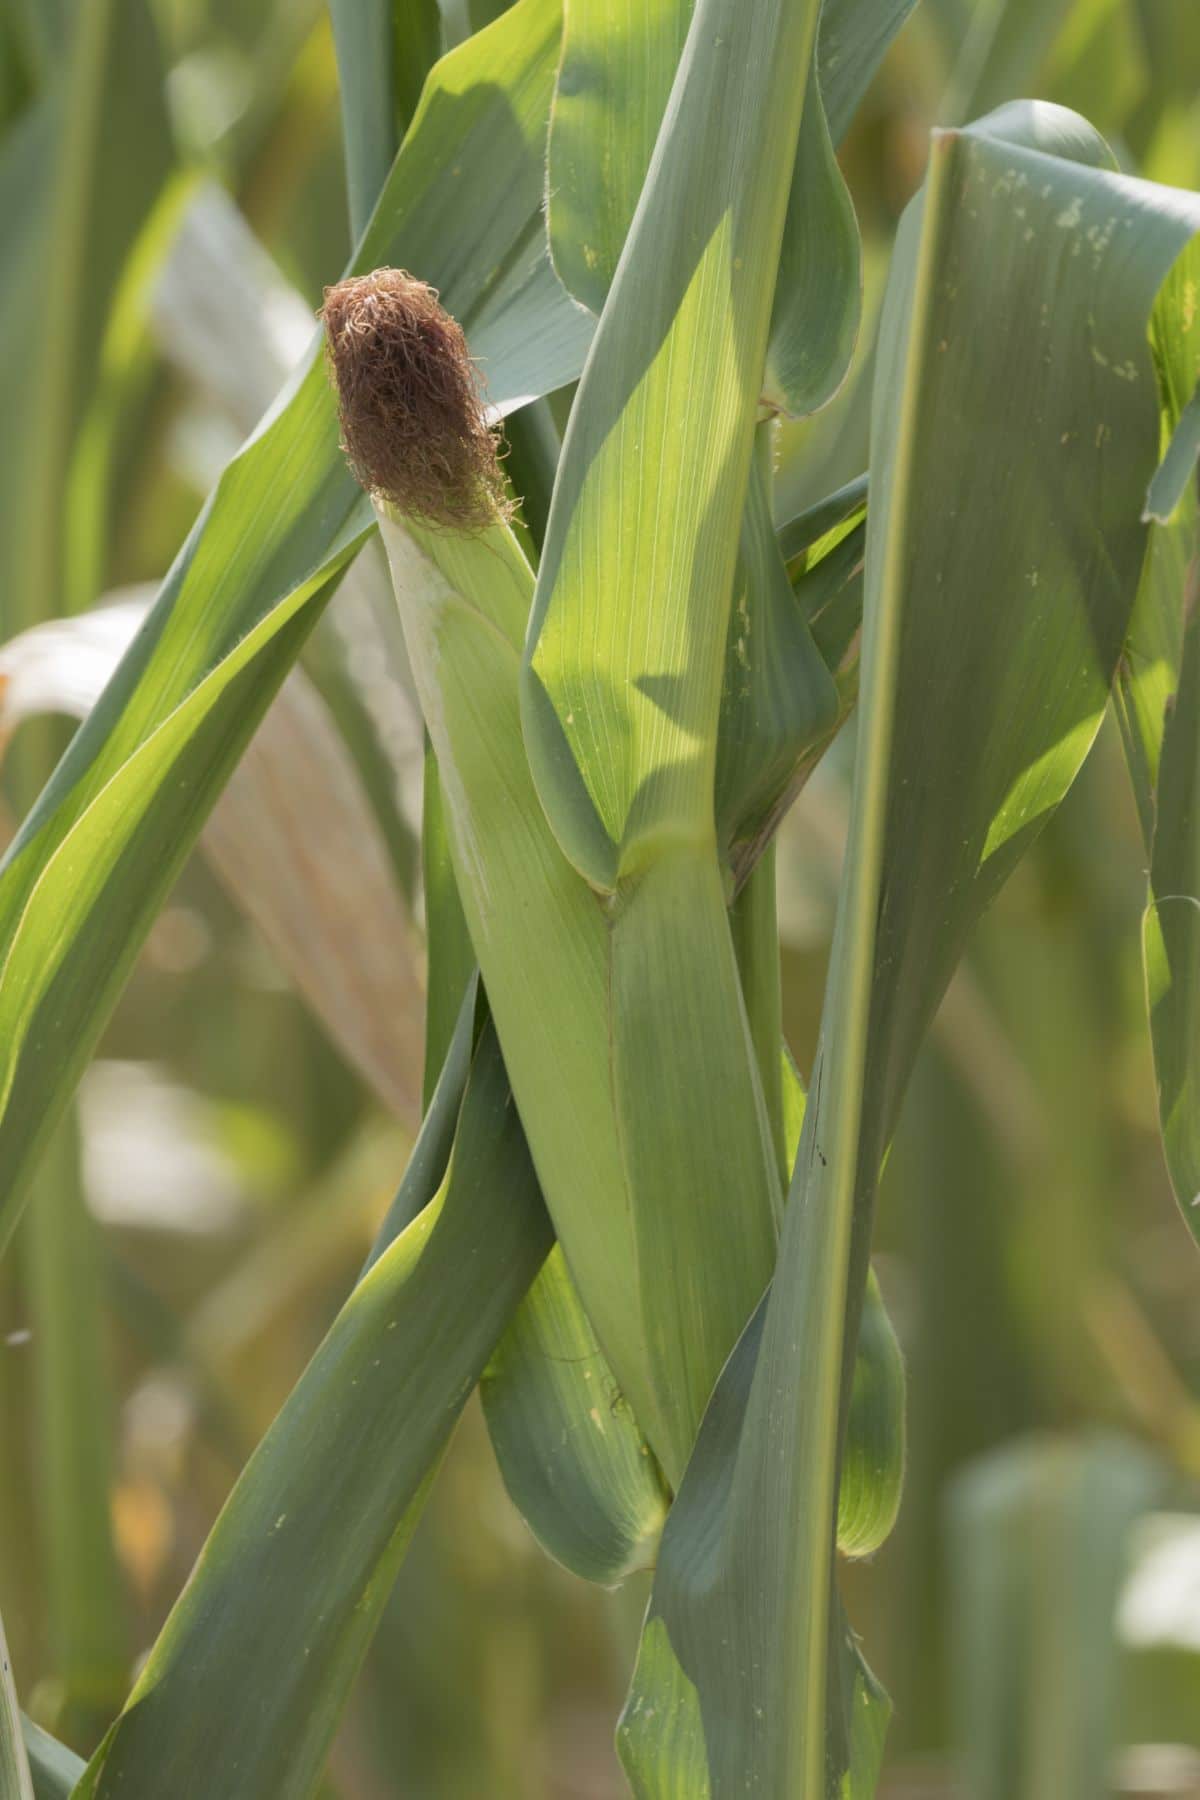 An ear of corn close up on a corn stalk